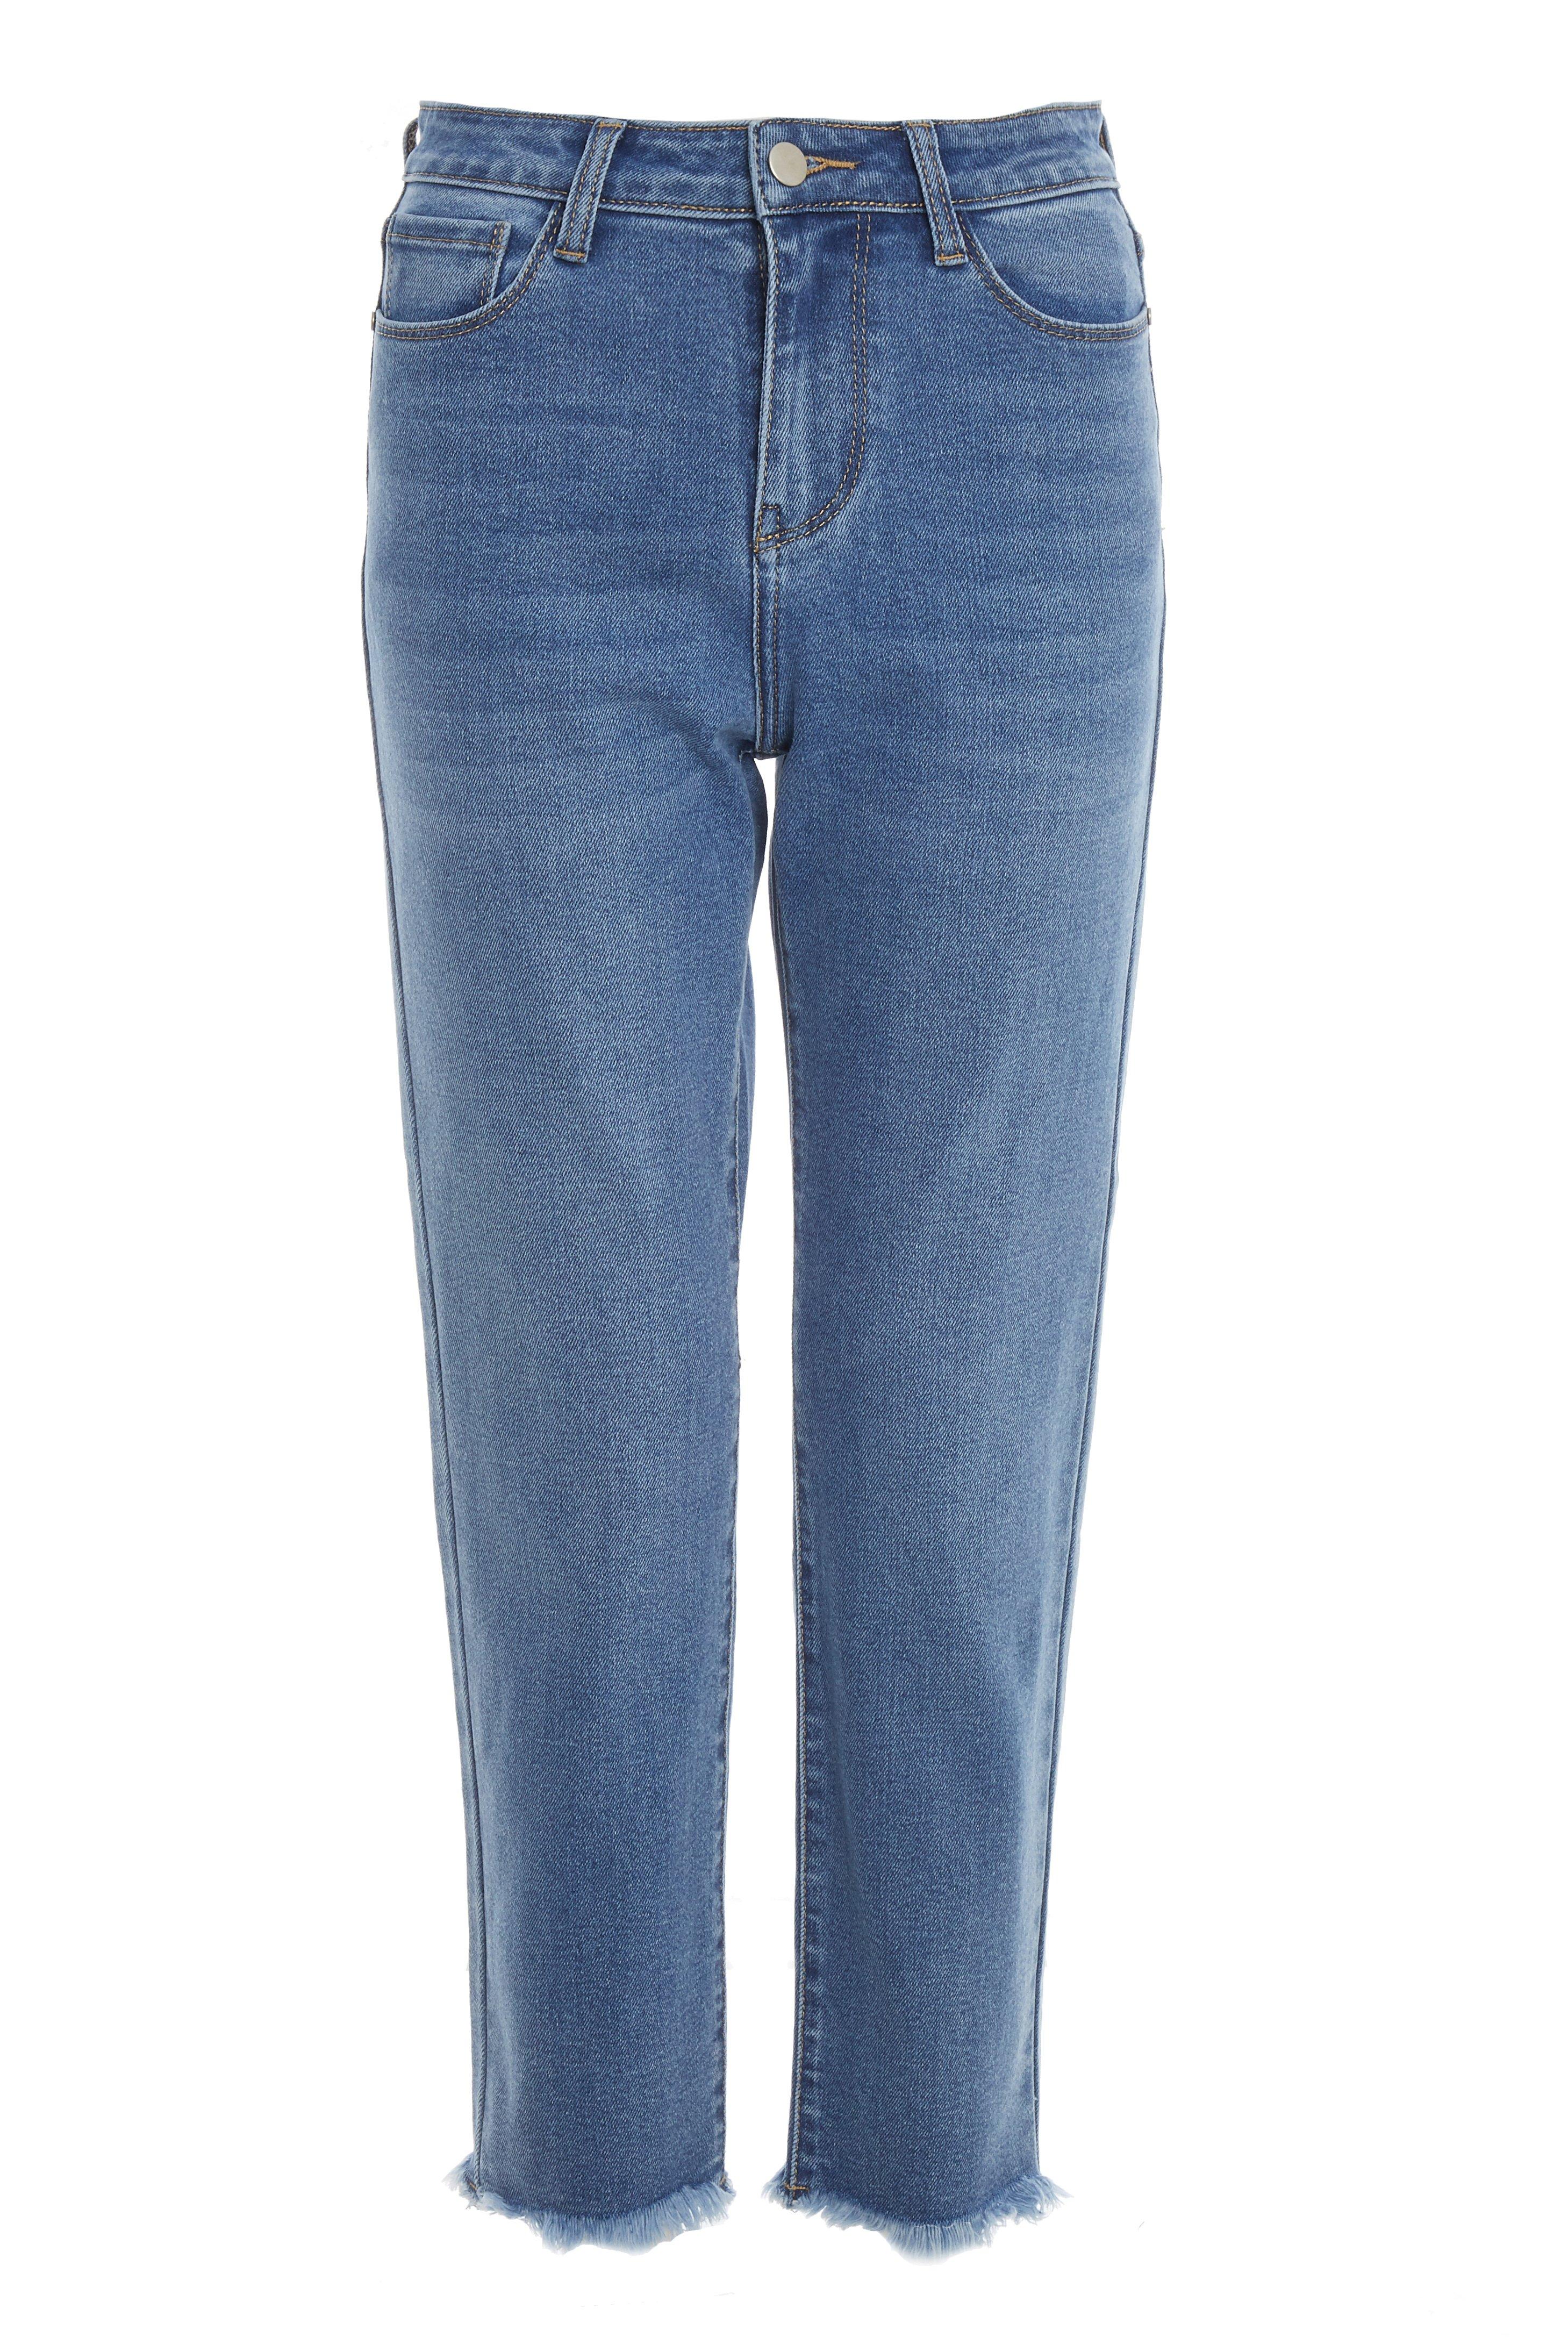 Petite Blue Denim Stretch Jeans - Quiz Clothing